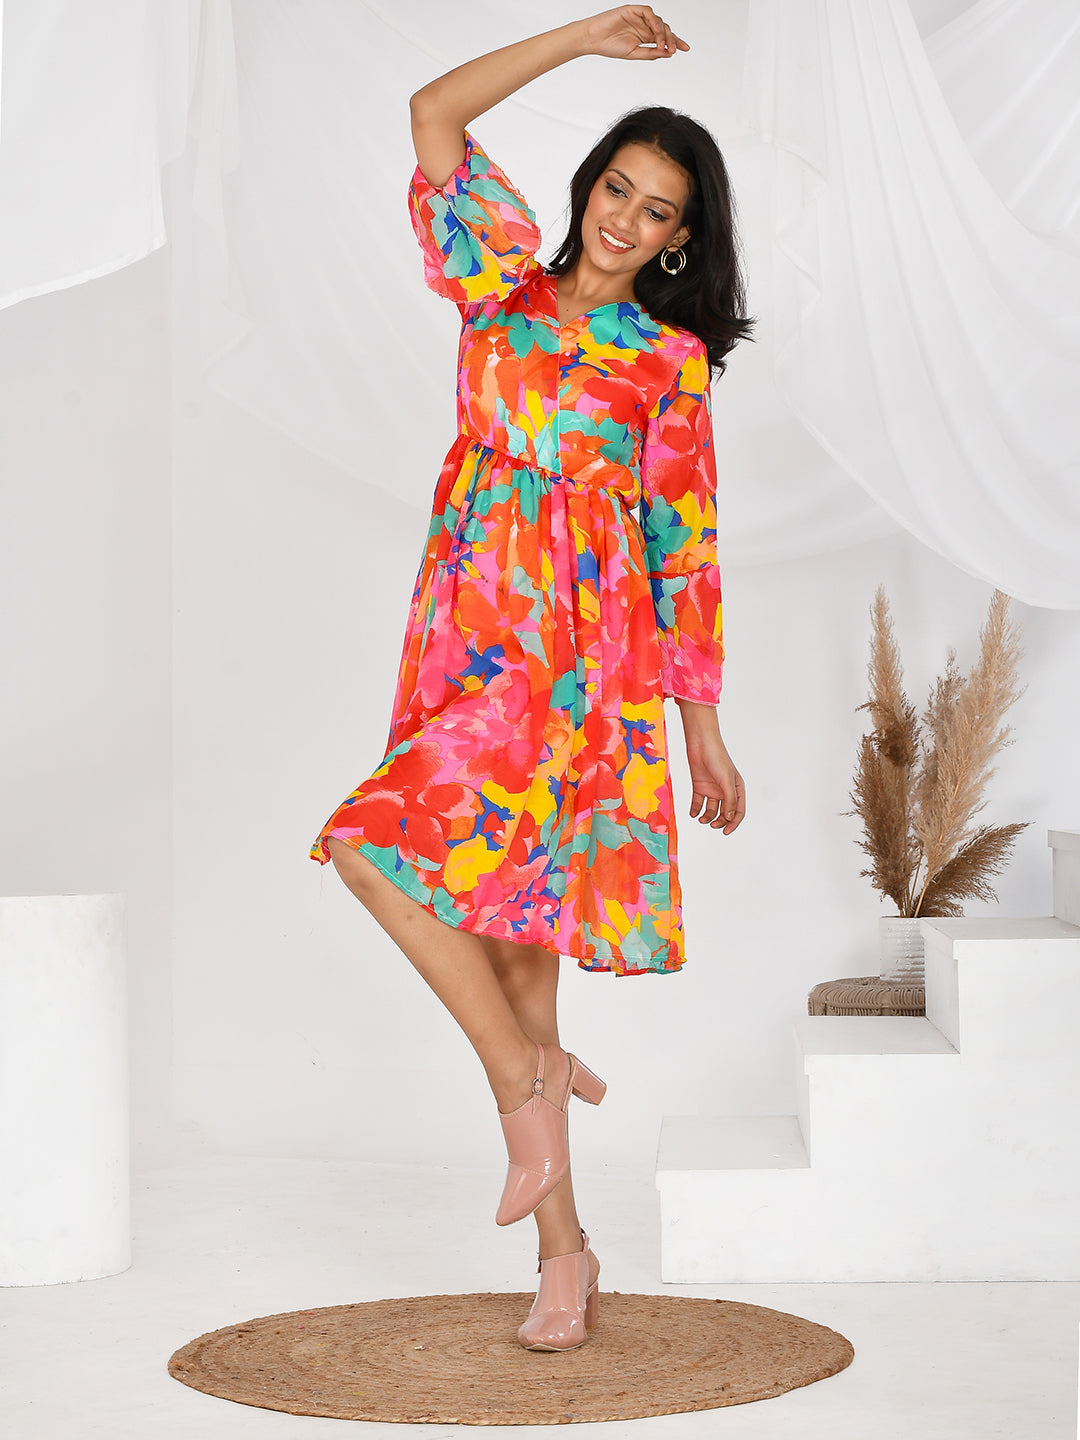 Buy KAMPHIRE Black Rib Knitted Cut Out Short Dress Girls Dress (X-Small) at  Amazon.in